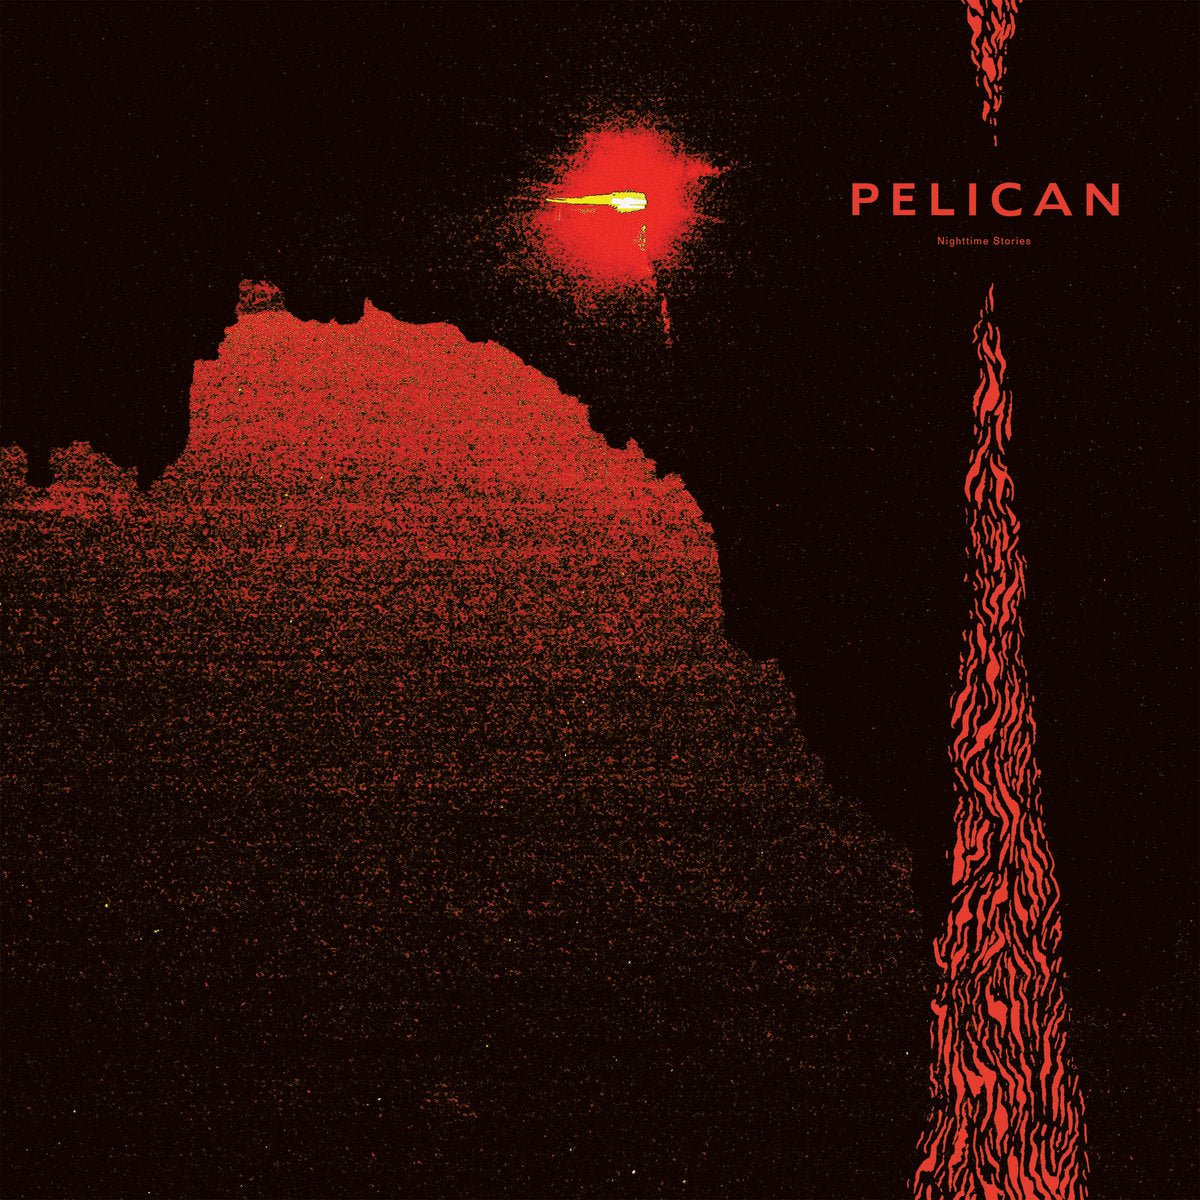 Pelican - Nighttime Stories LP - Vinyl - Southern Lord